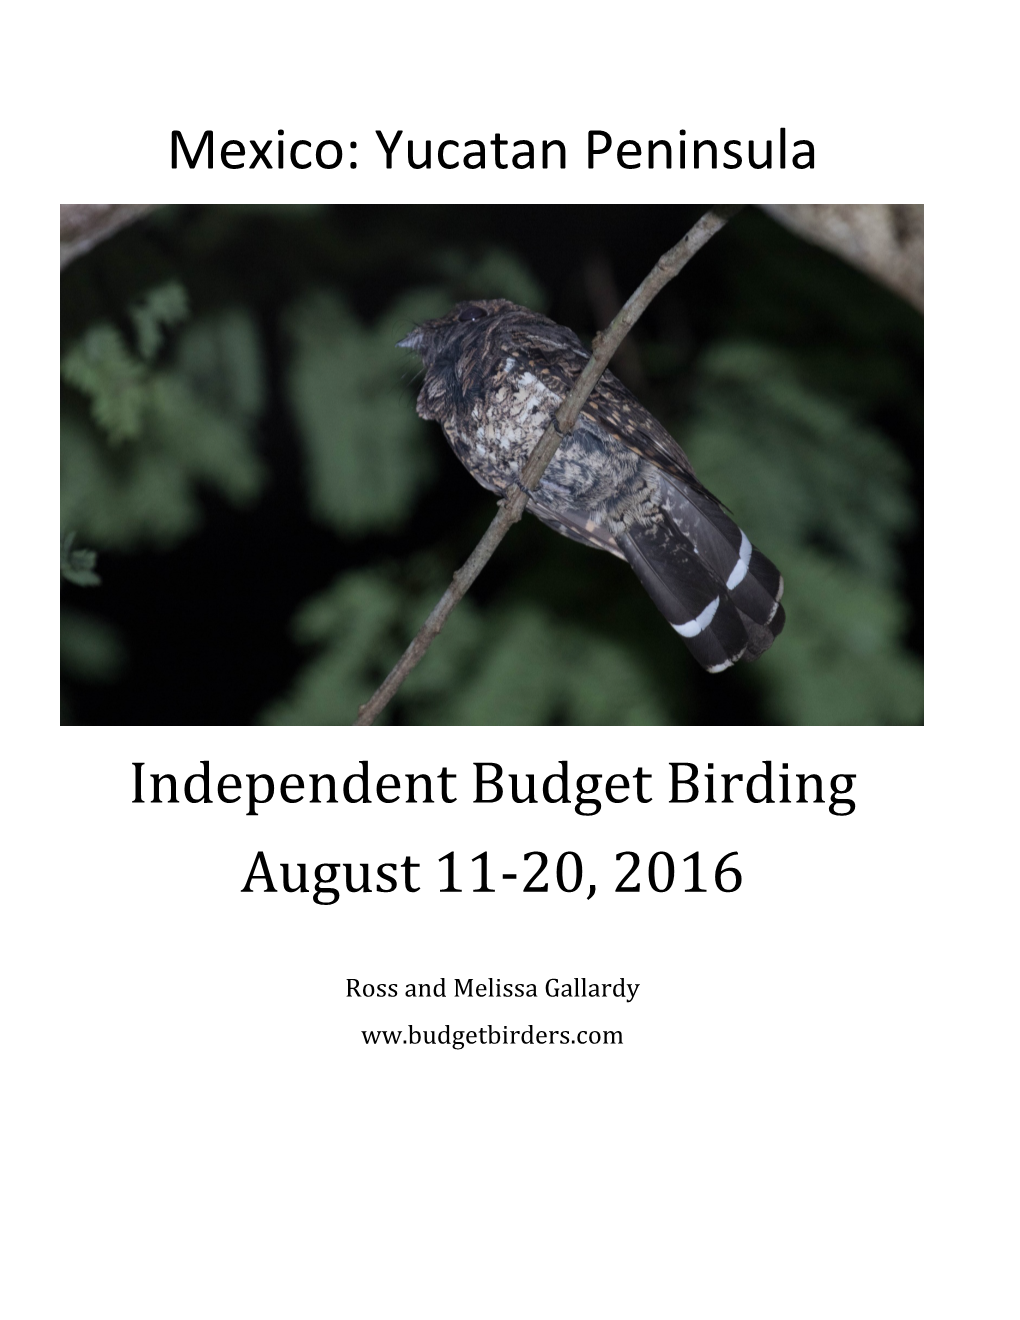 Yucatan Peninsula Independent Budget Birding August 11-20, 2016